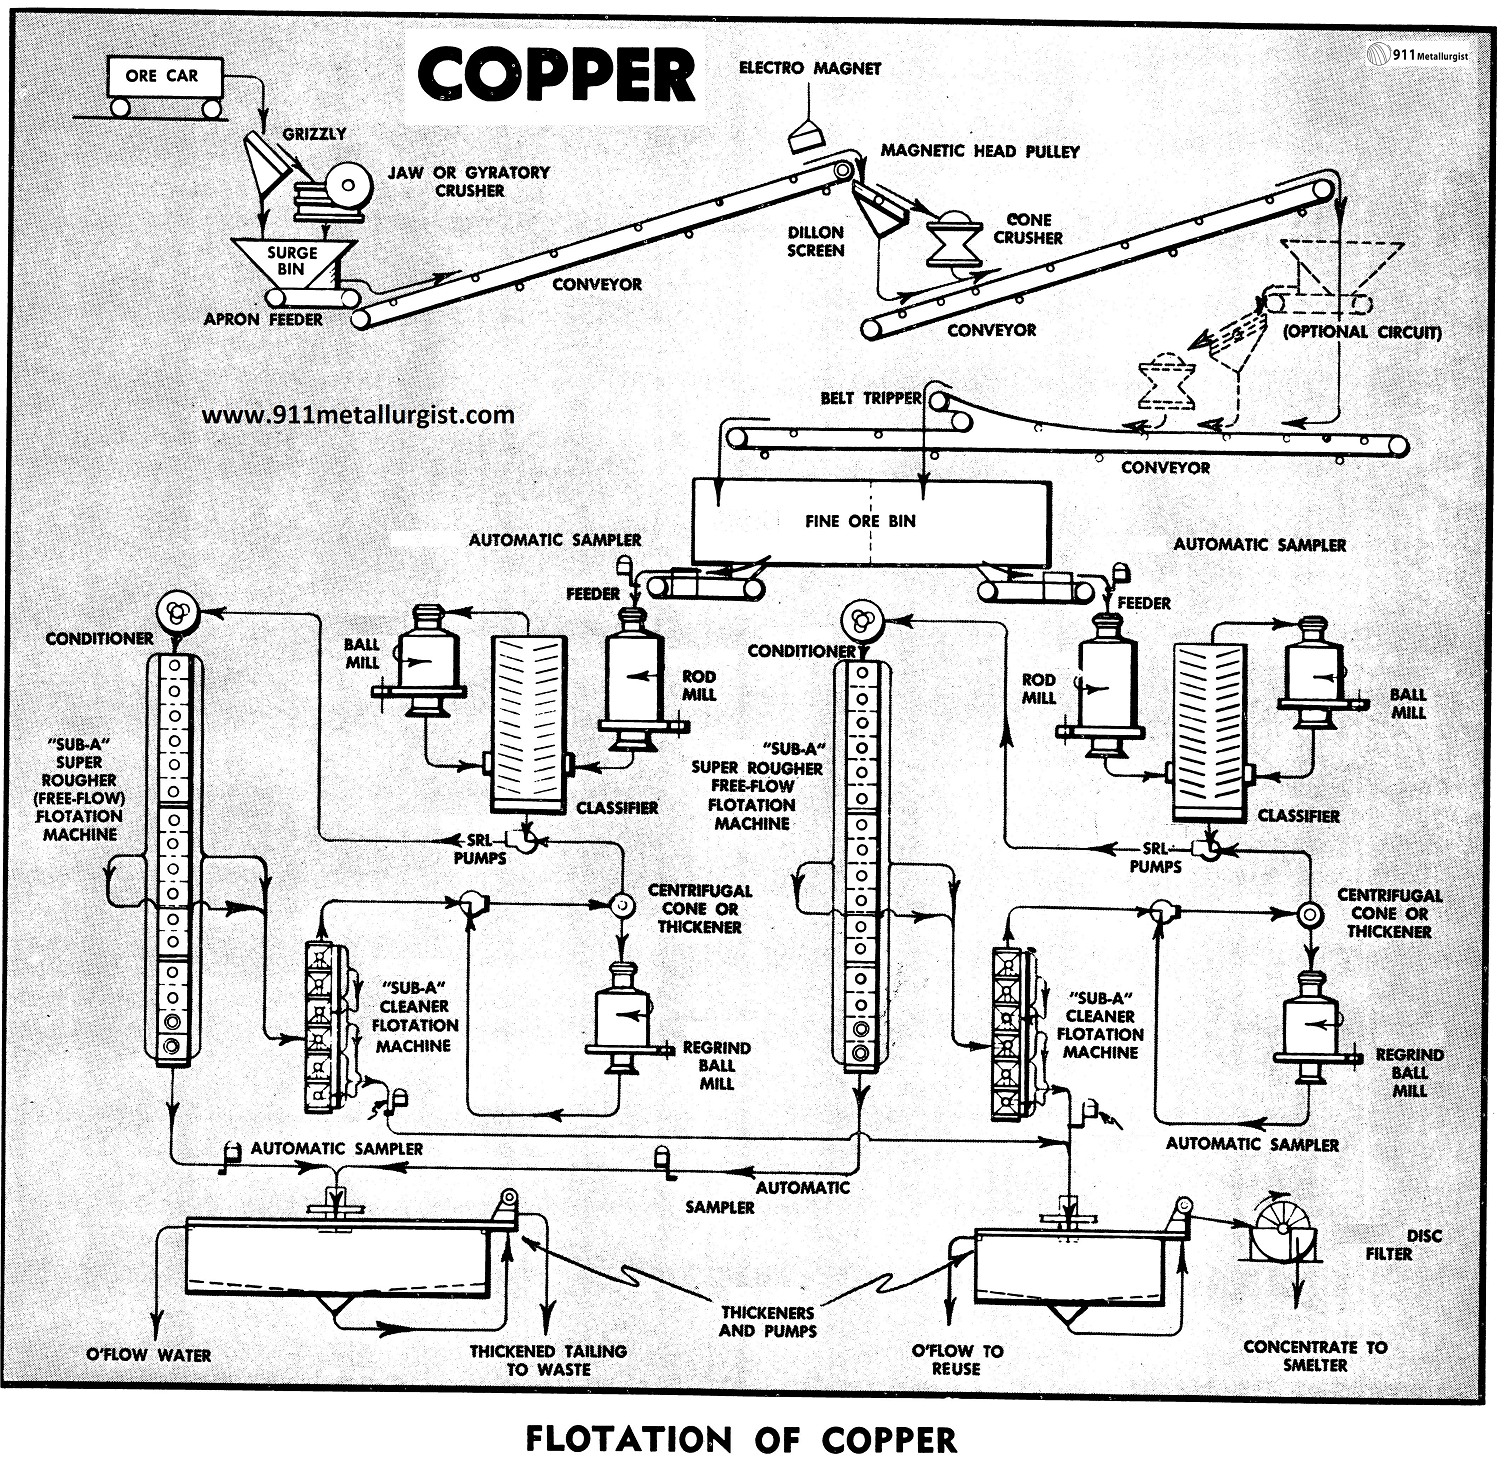 Flotation of Copper